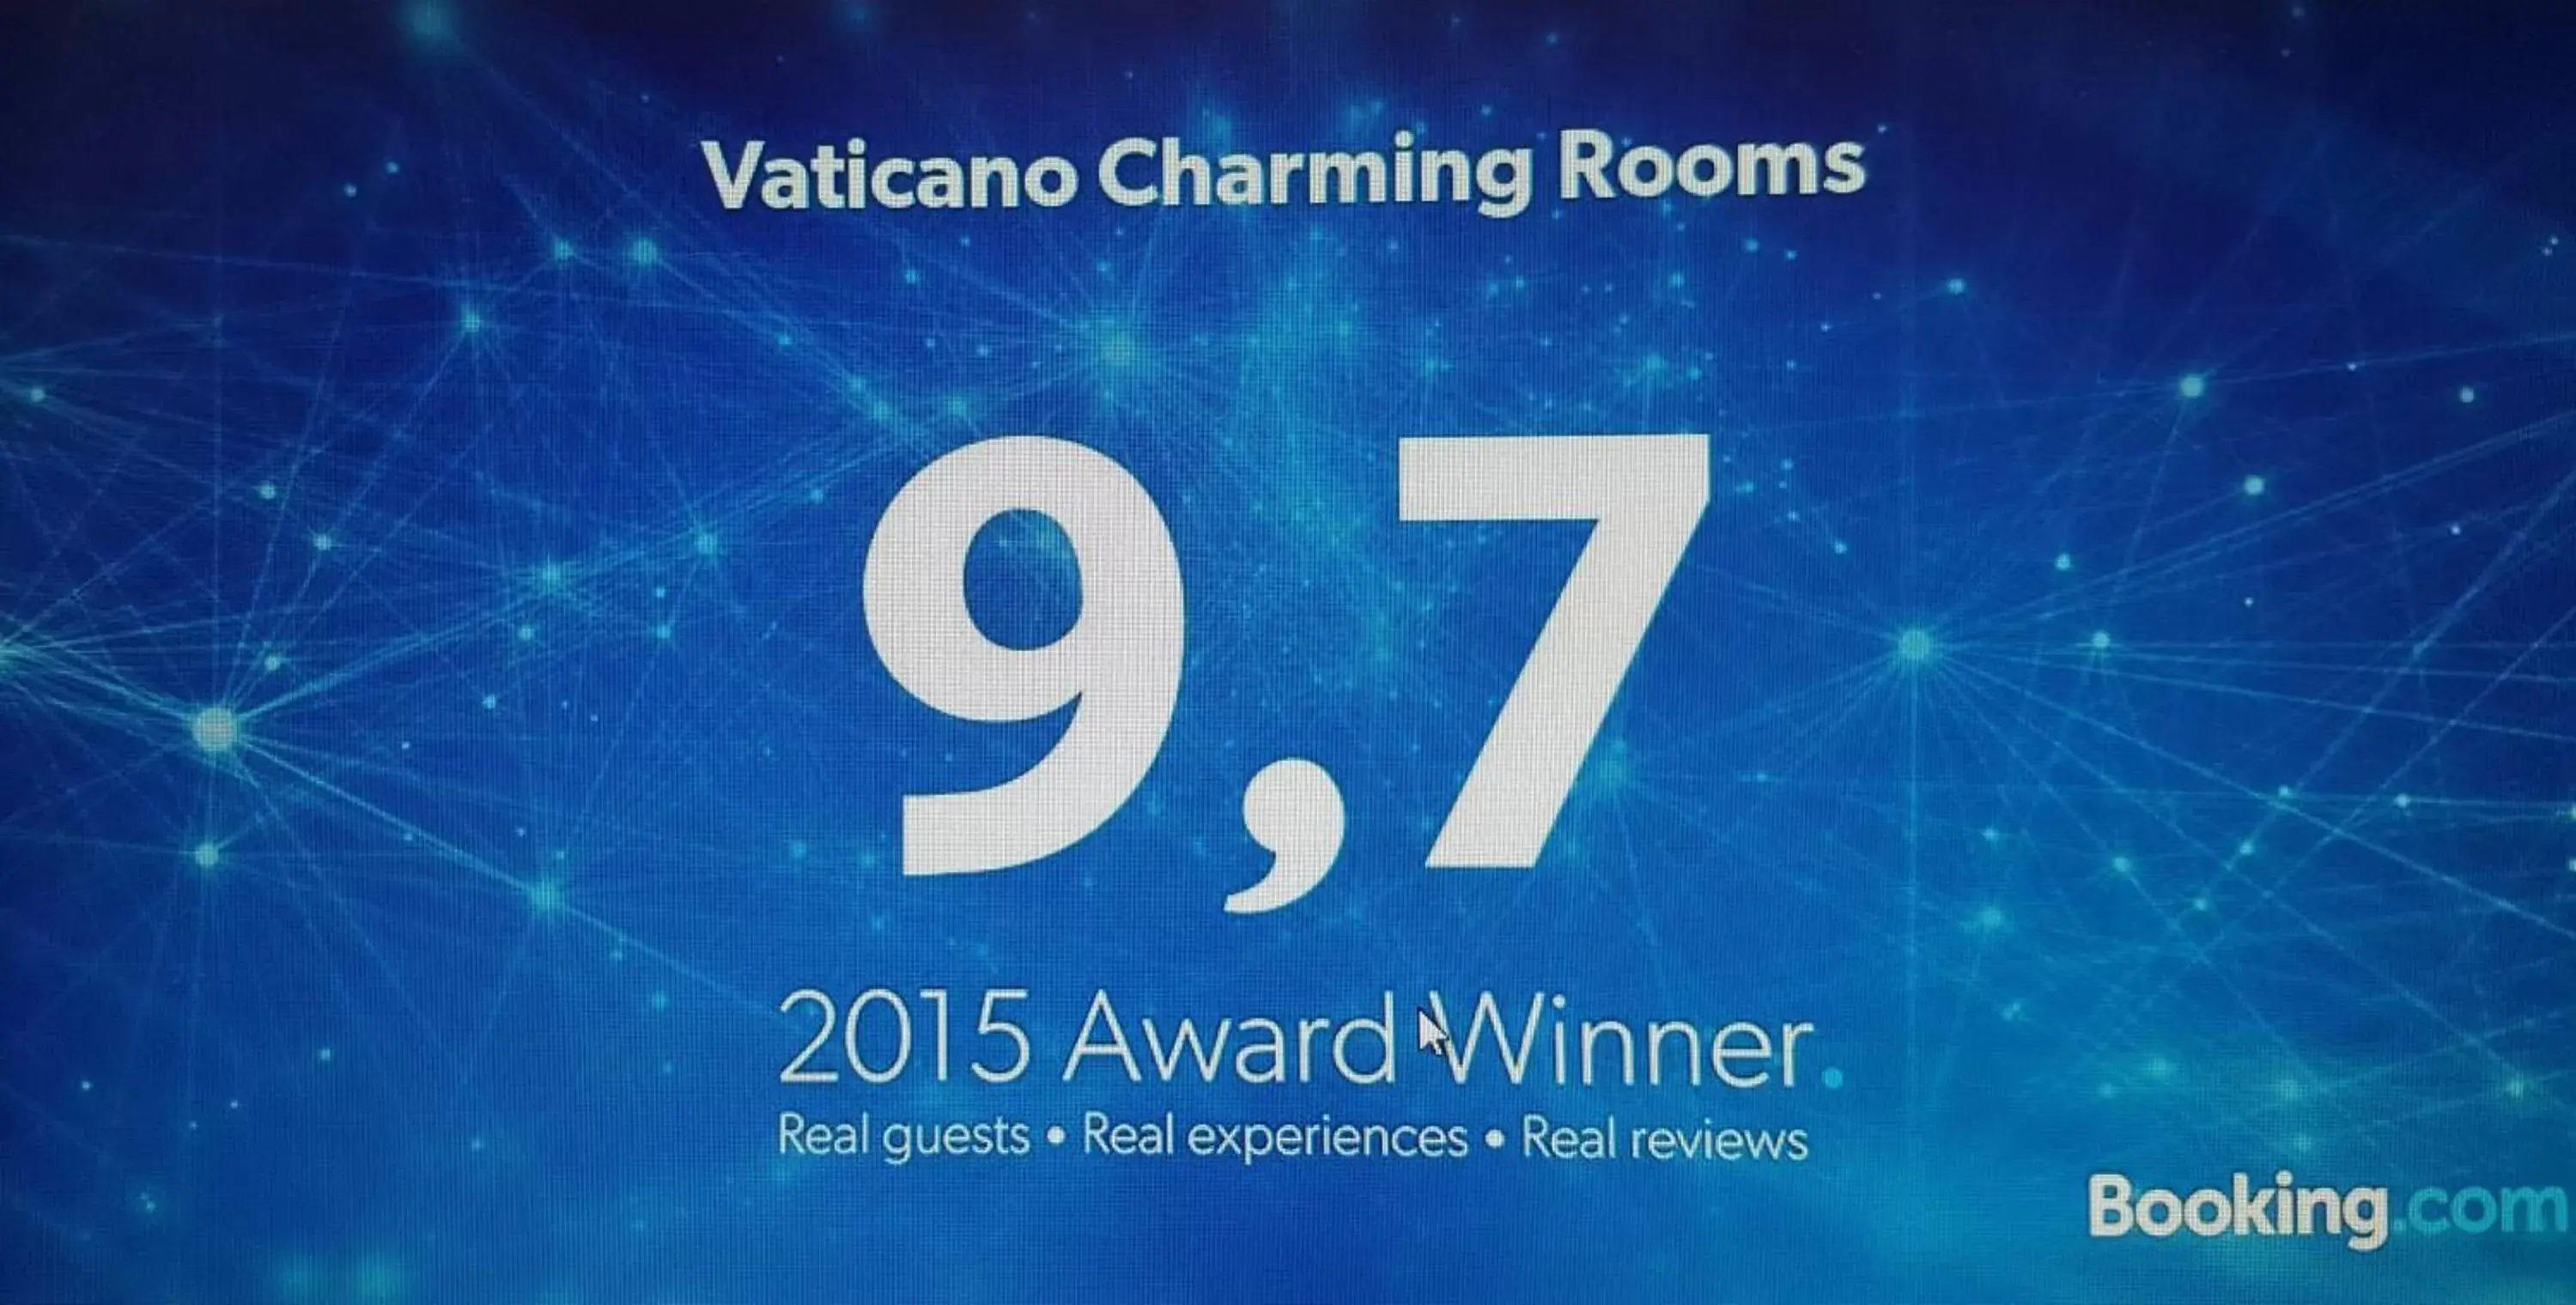 Certificate/Award in Vaticano Charming Rooms